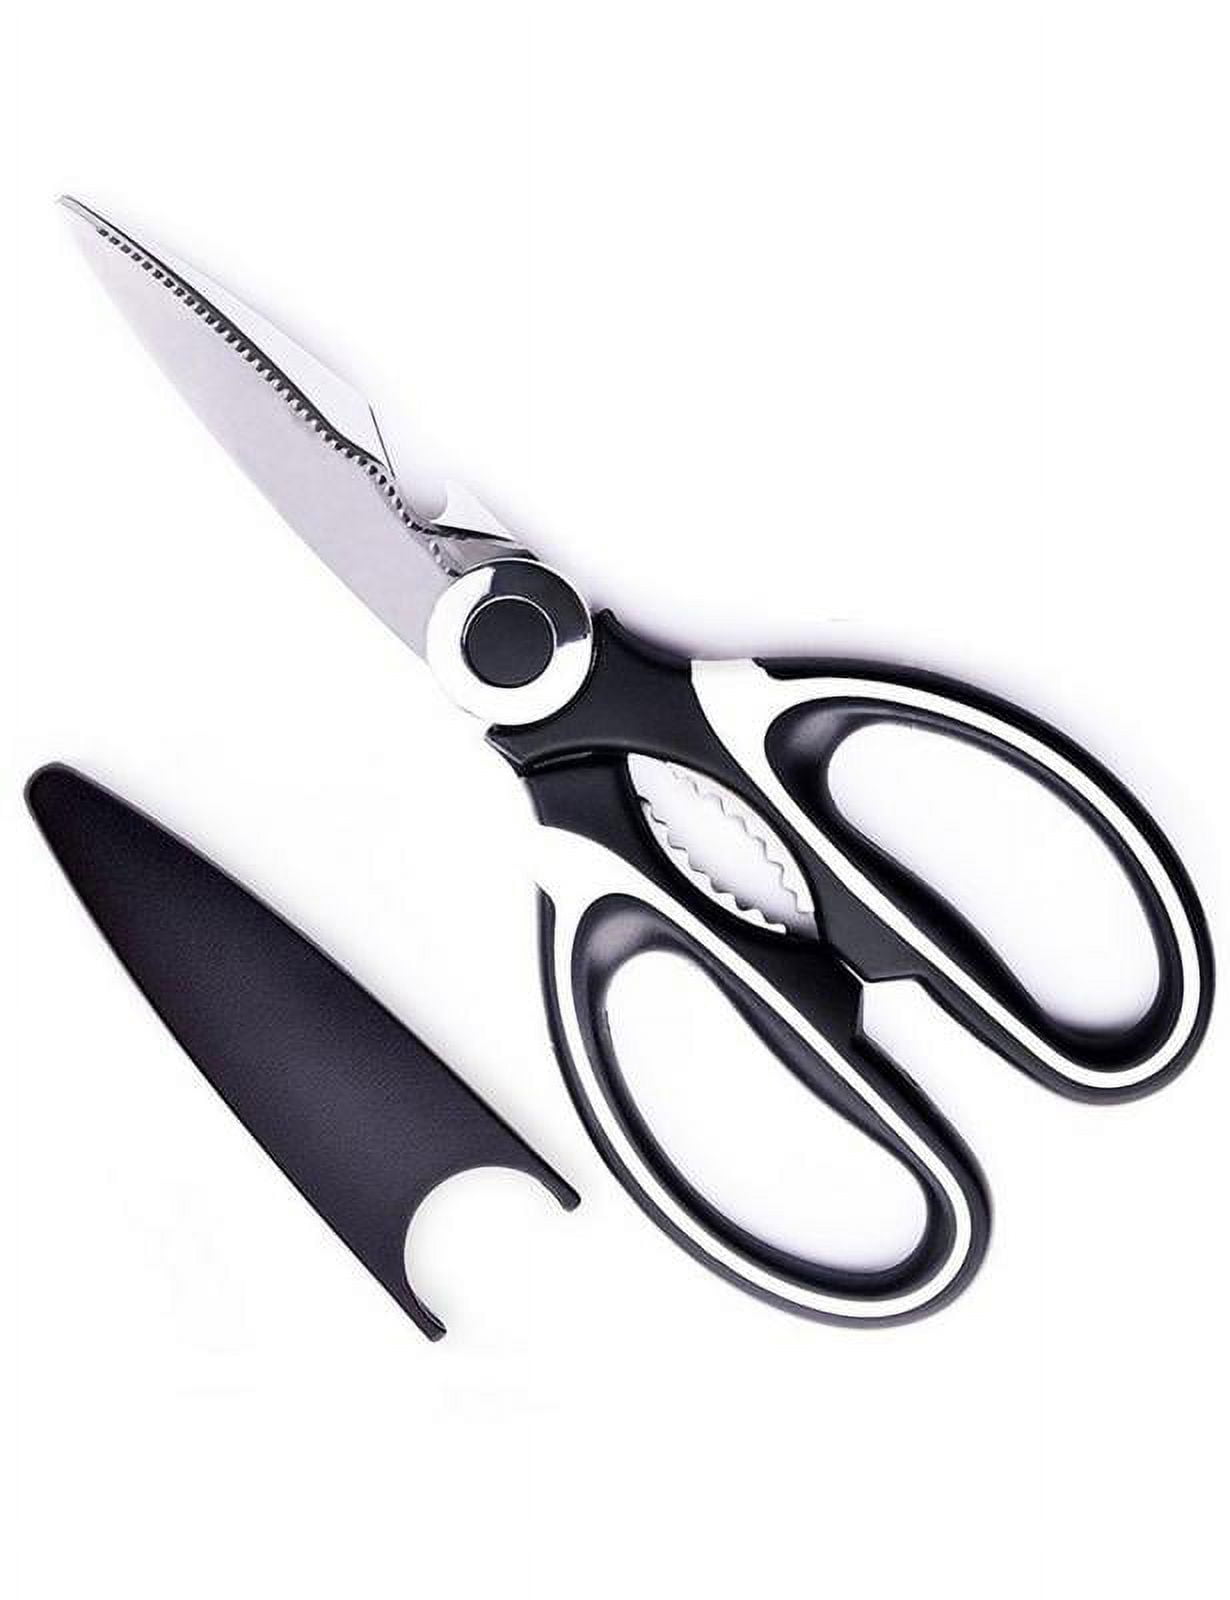 C.JET TOOL 8 Sharp Stainless Kitchen Scissors Meat Vegetables Herbs F